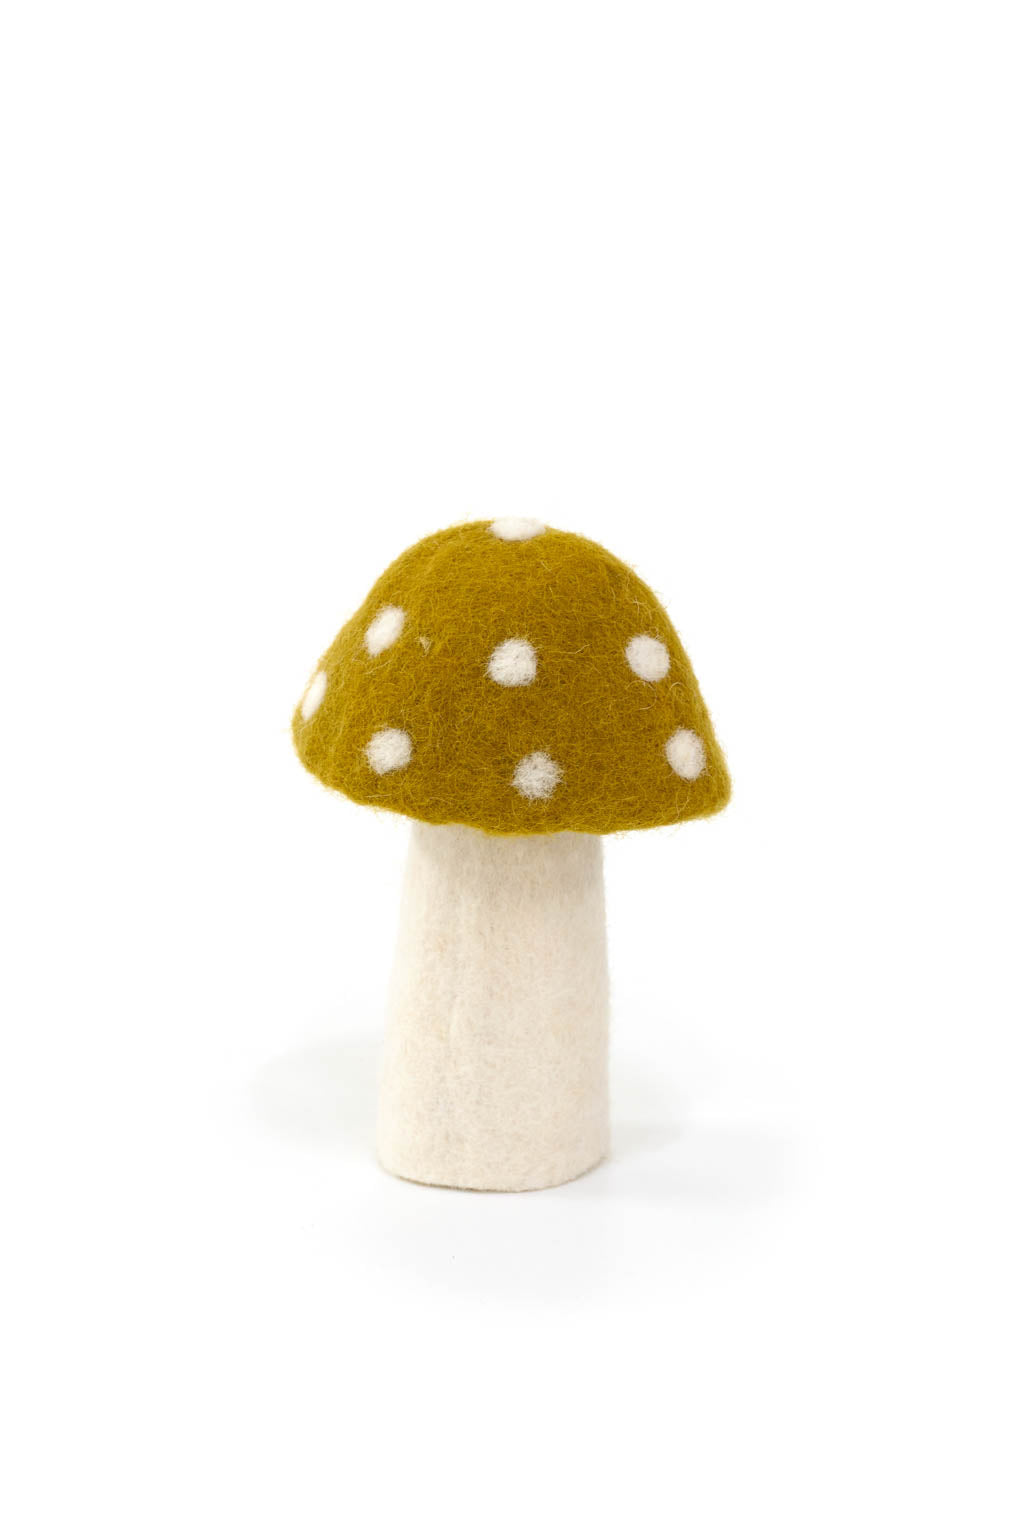 Dotty Mushroom - Extra Large 13cm